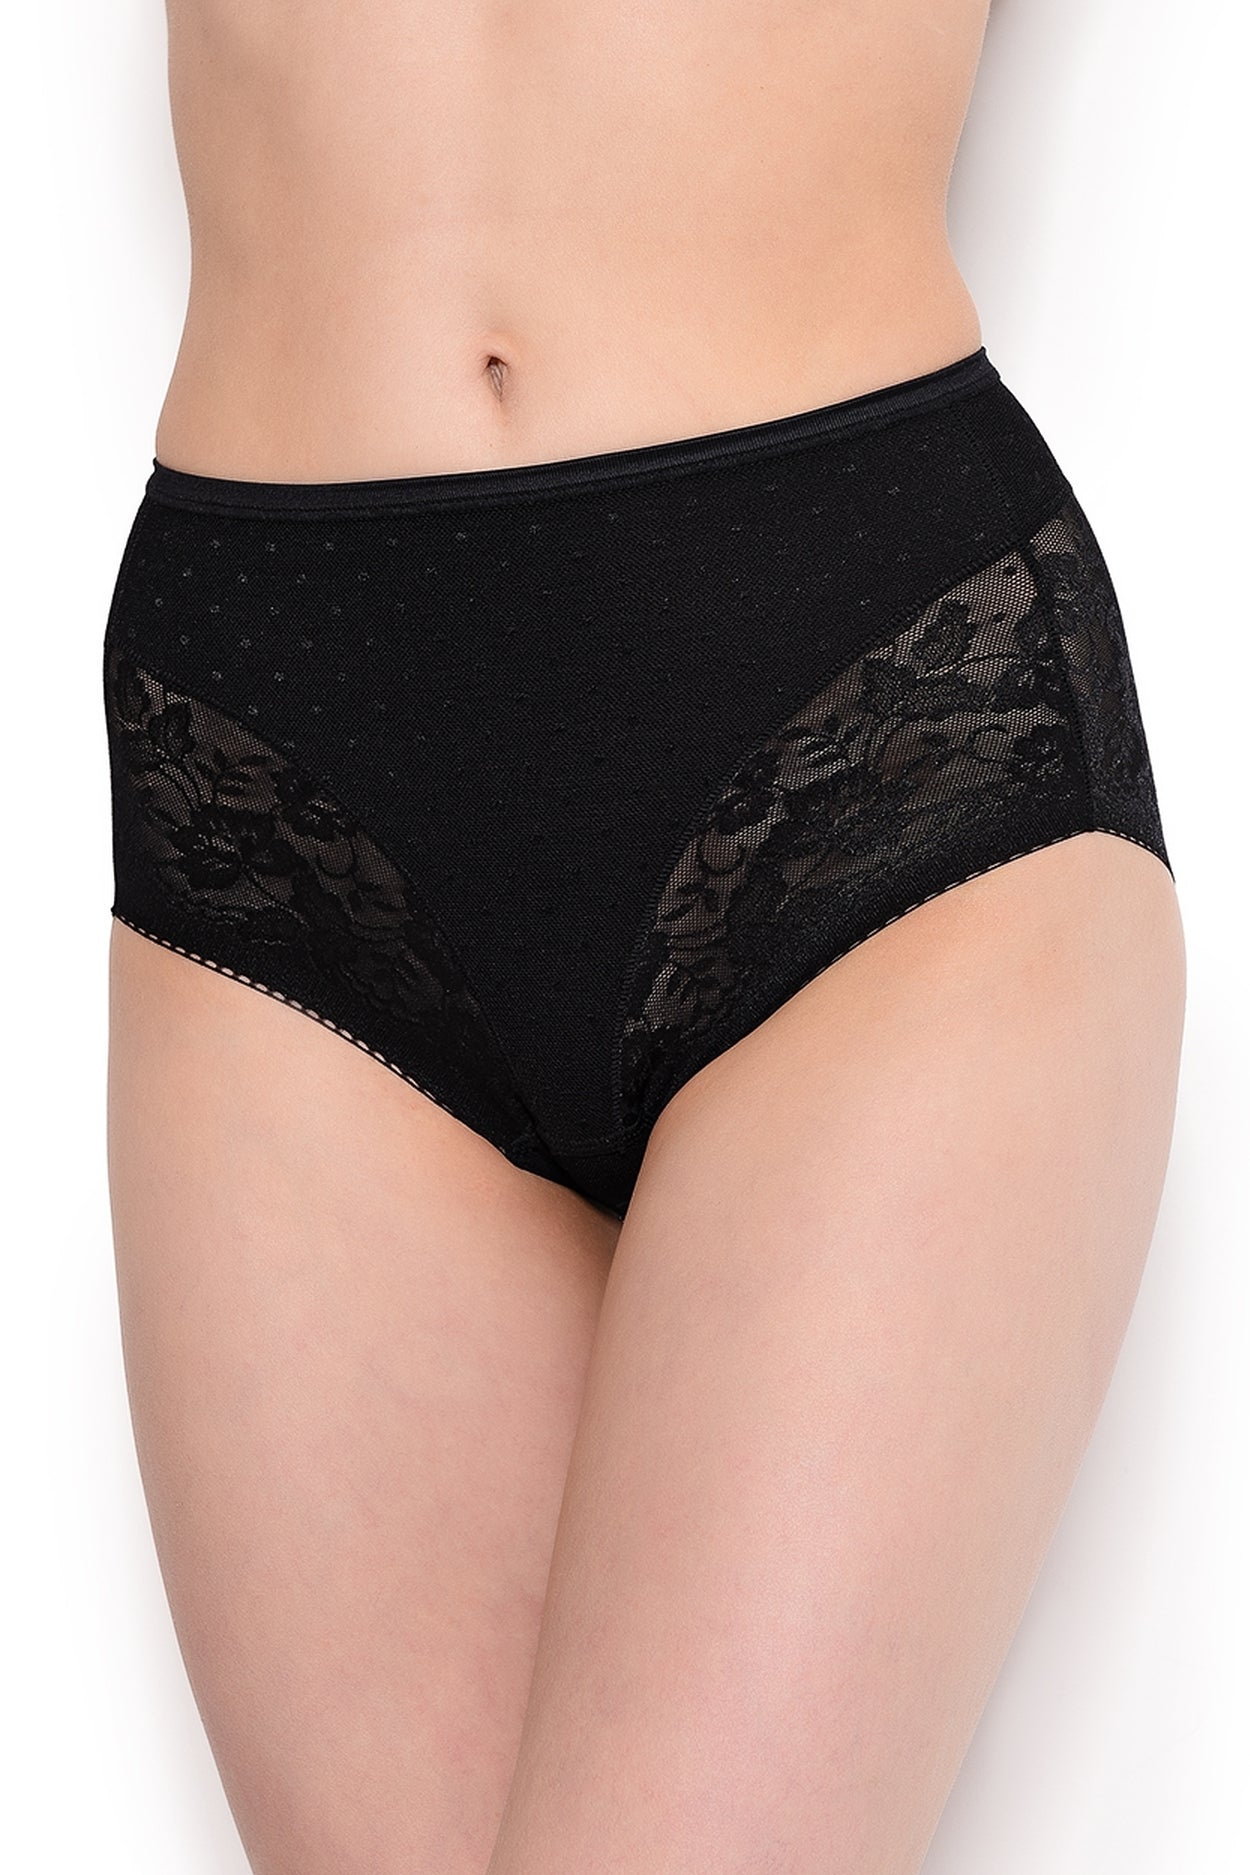 shpwfbe underwear women solid lace seamles traceles ie cotton lift bras for  women lingerie for women 